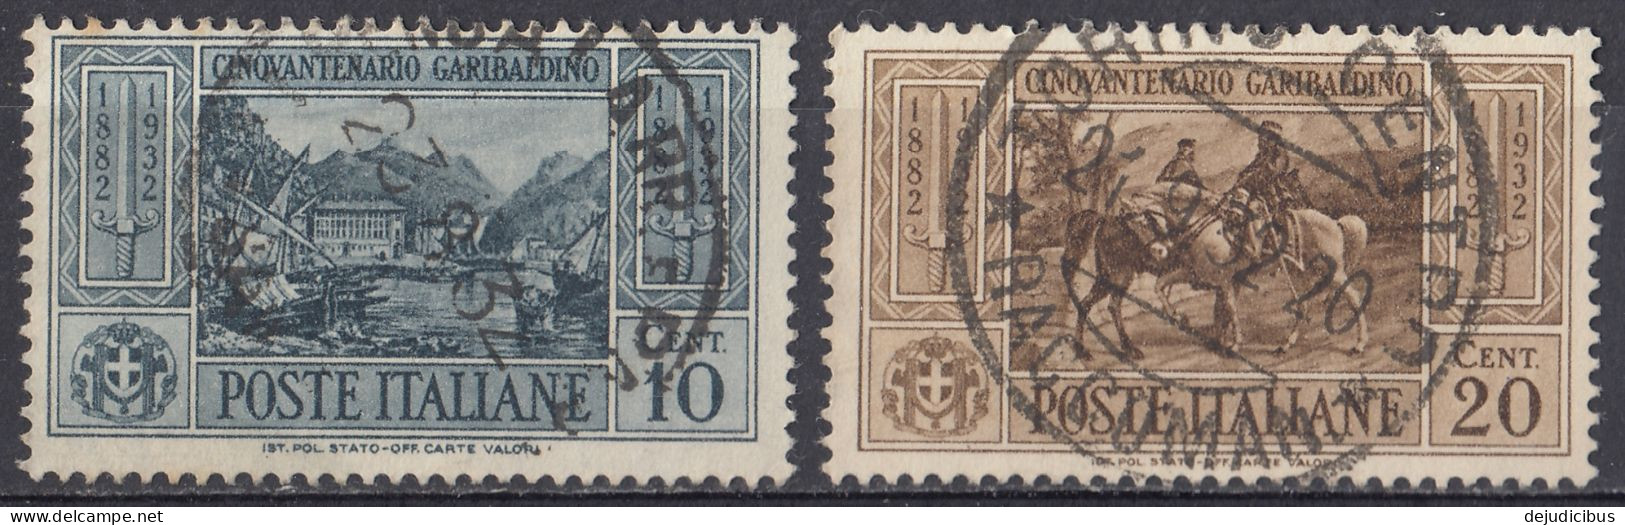 ITALIA - 1932 - Lotto Di 2 Valori Usati:  Yvert 295 E 296. - Postal Parcels